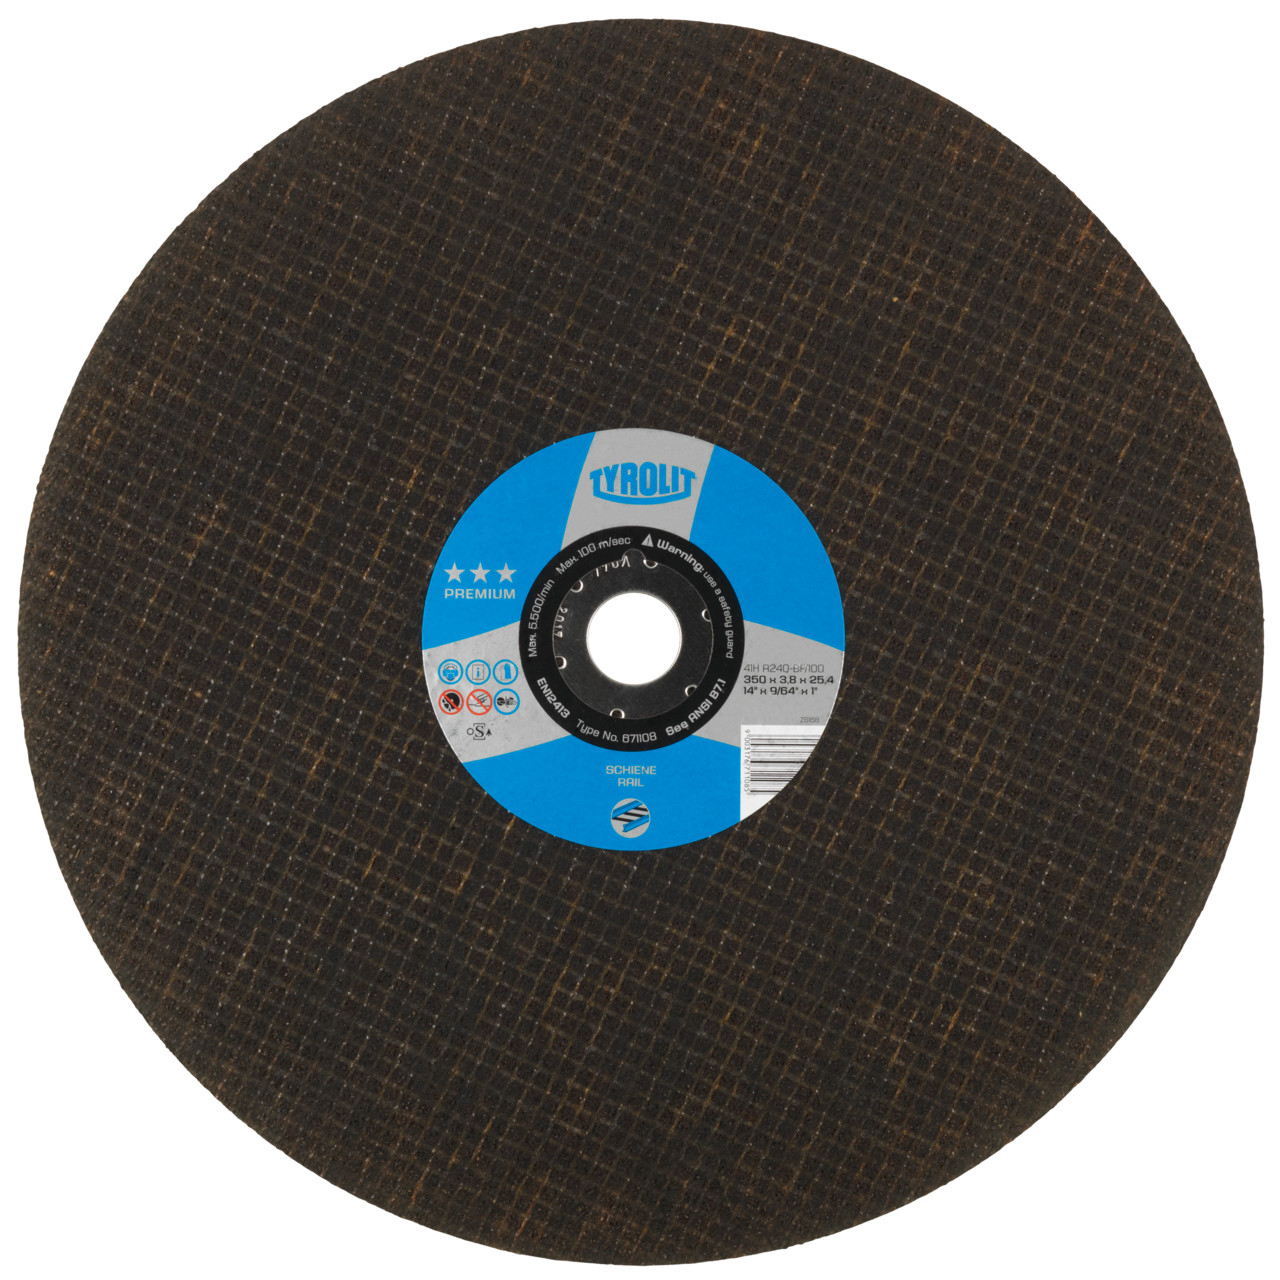 Tyrolit Cutting discs DxDxH 400x4.3x22.2 For rails, shape: 41 - straight version, Art. 671090